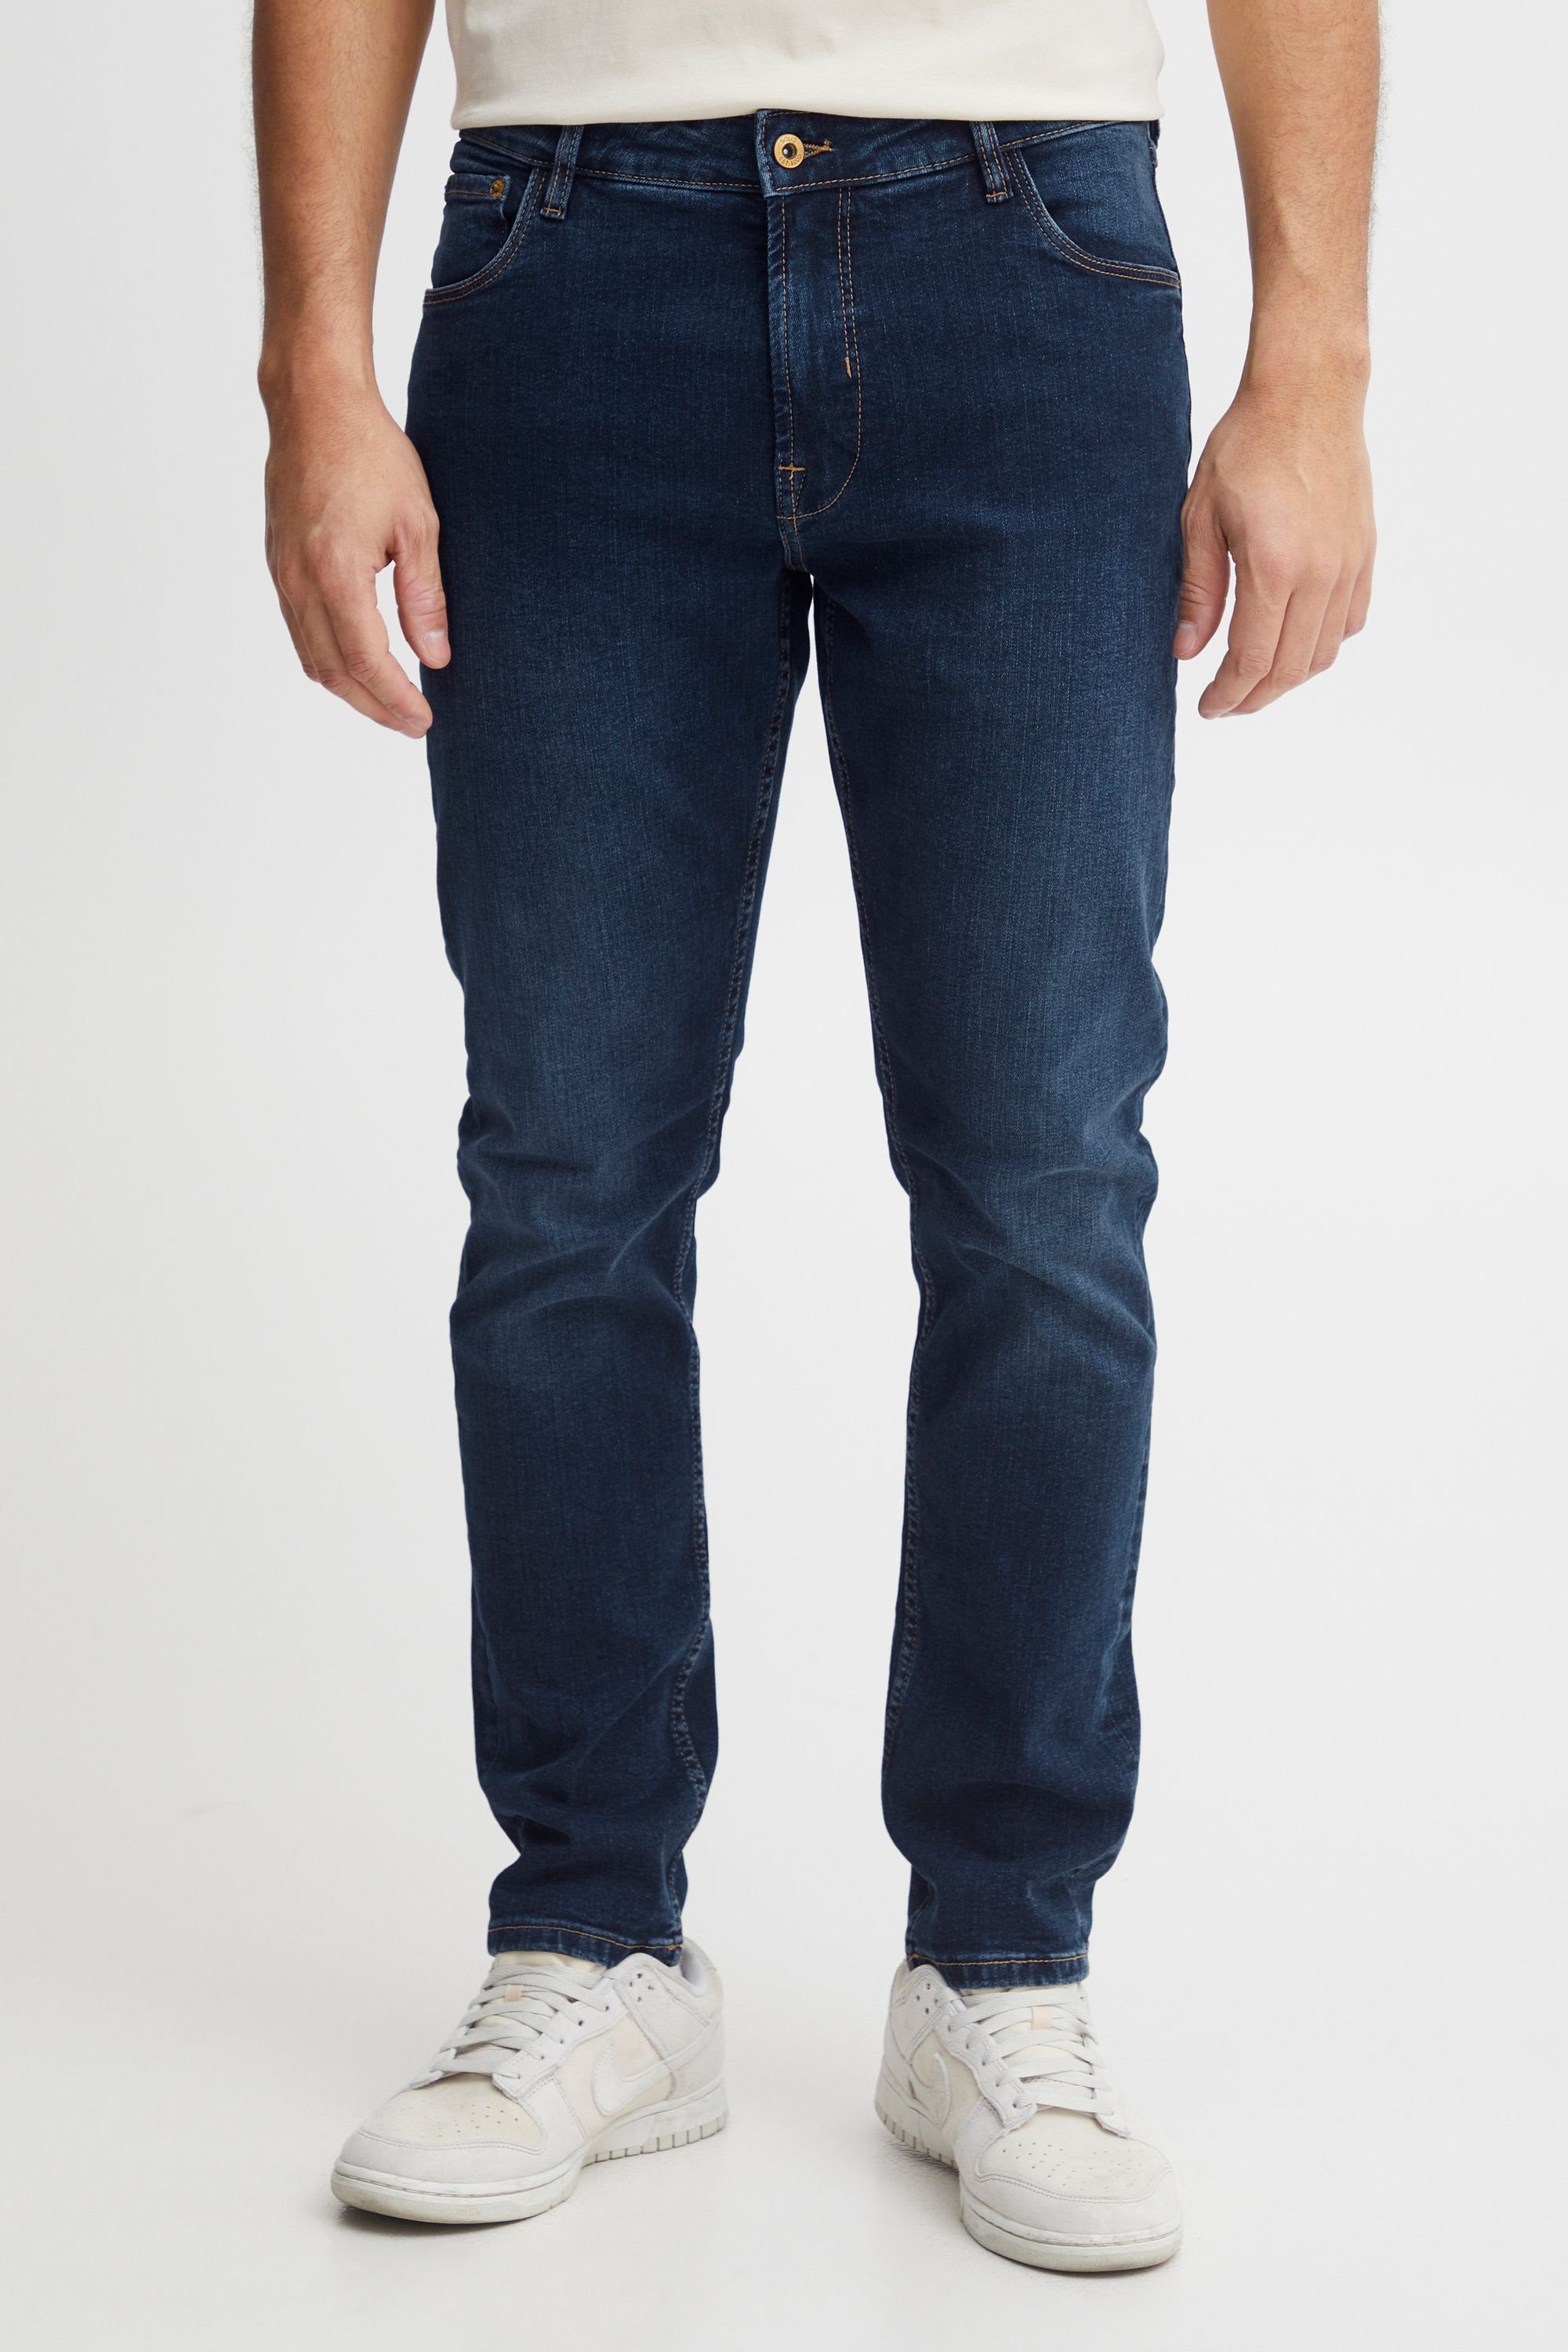 - !Solid Joy Slim-fit-Jeans 21107404 blue (700031) SDDunley Dark denim